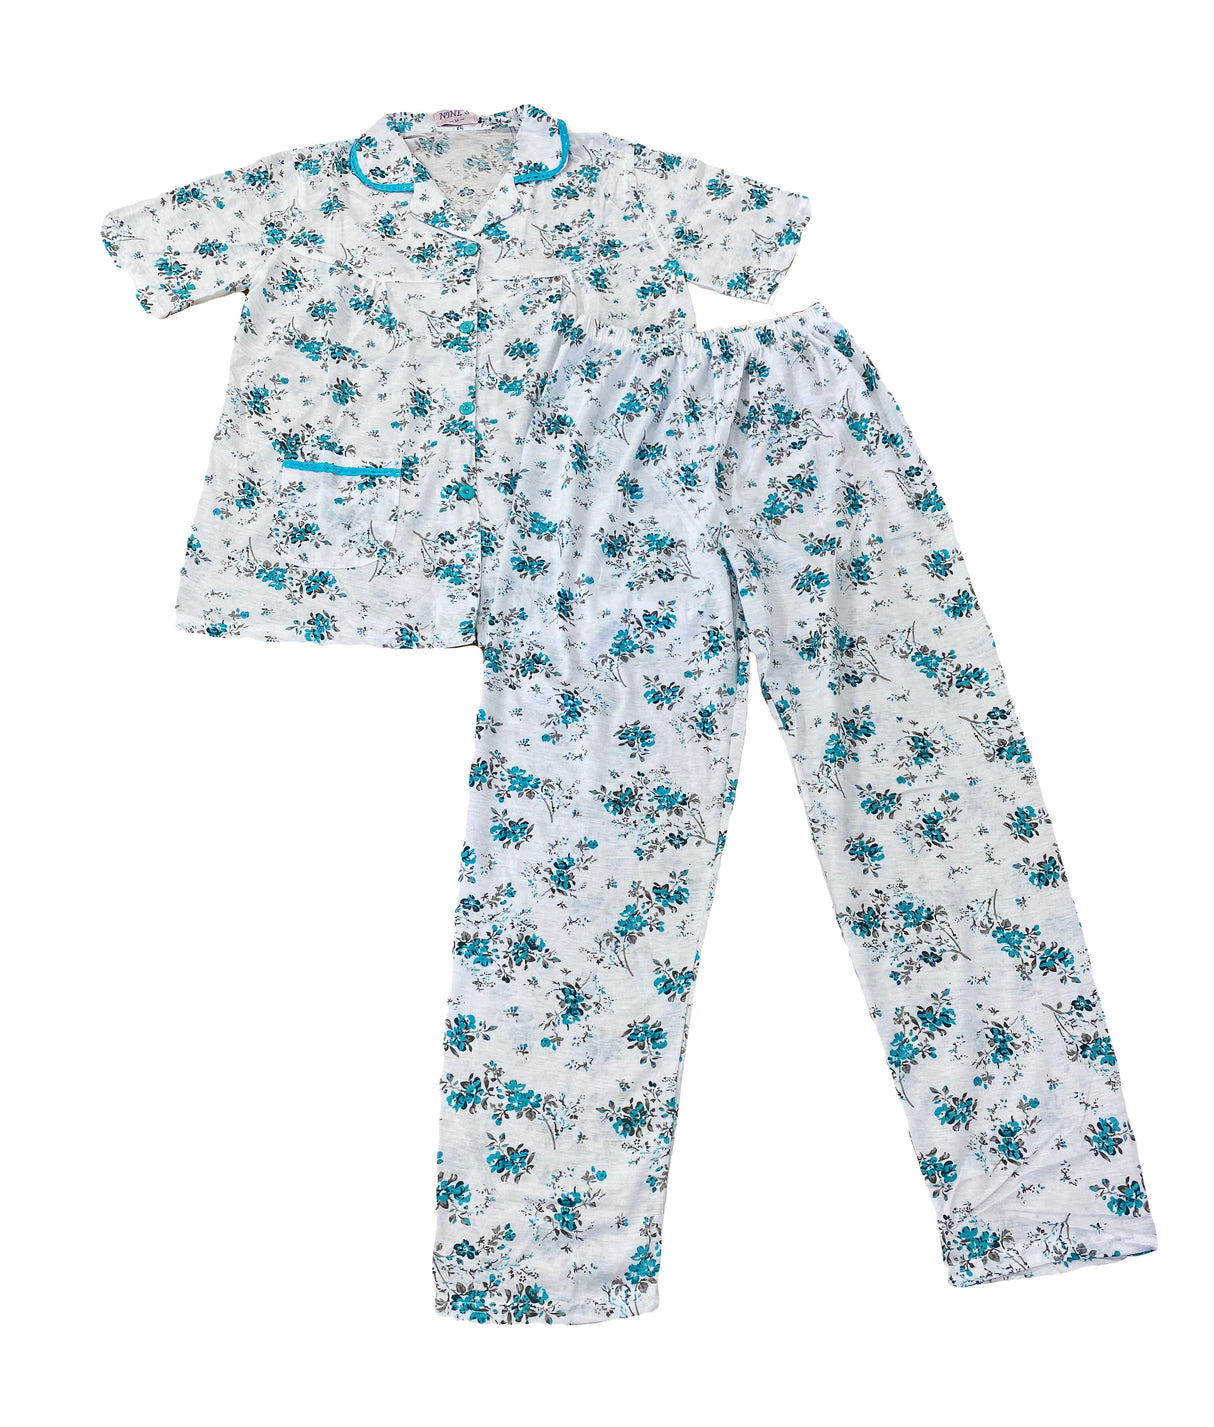 Nines, Women's Pajamas Set, 2 Pcs